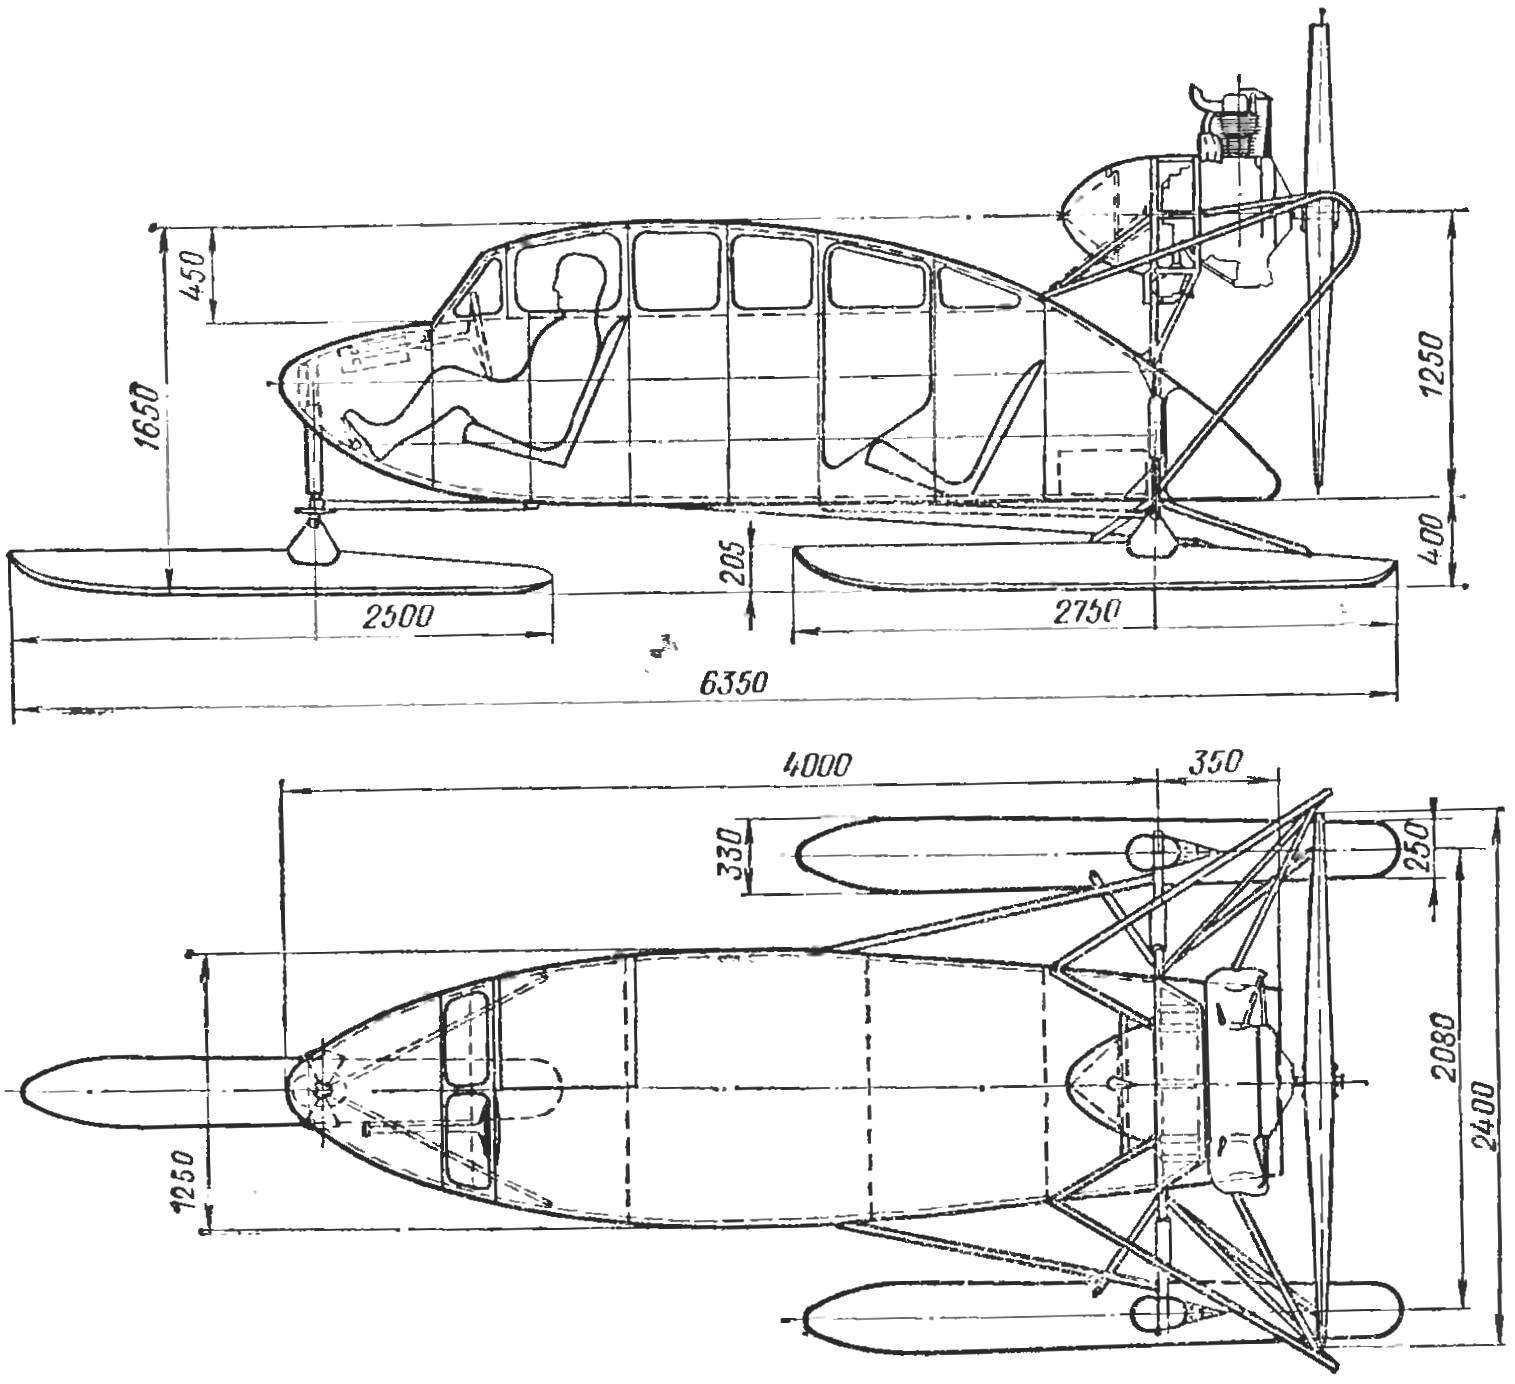 Fig. 2. Basic dimensions snowmobiles of OSG-6